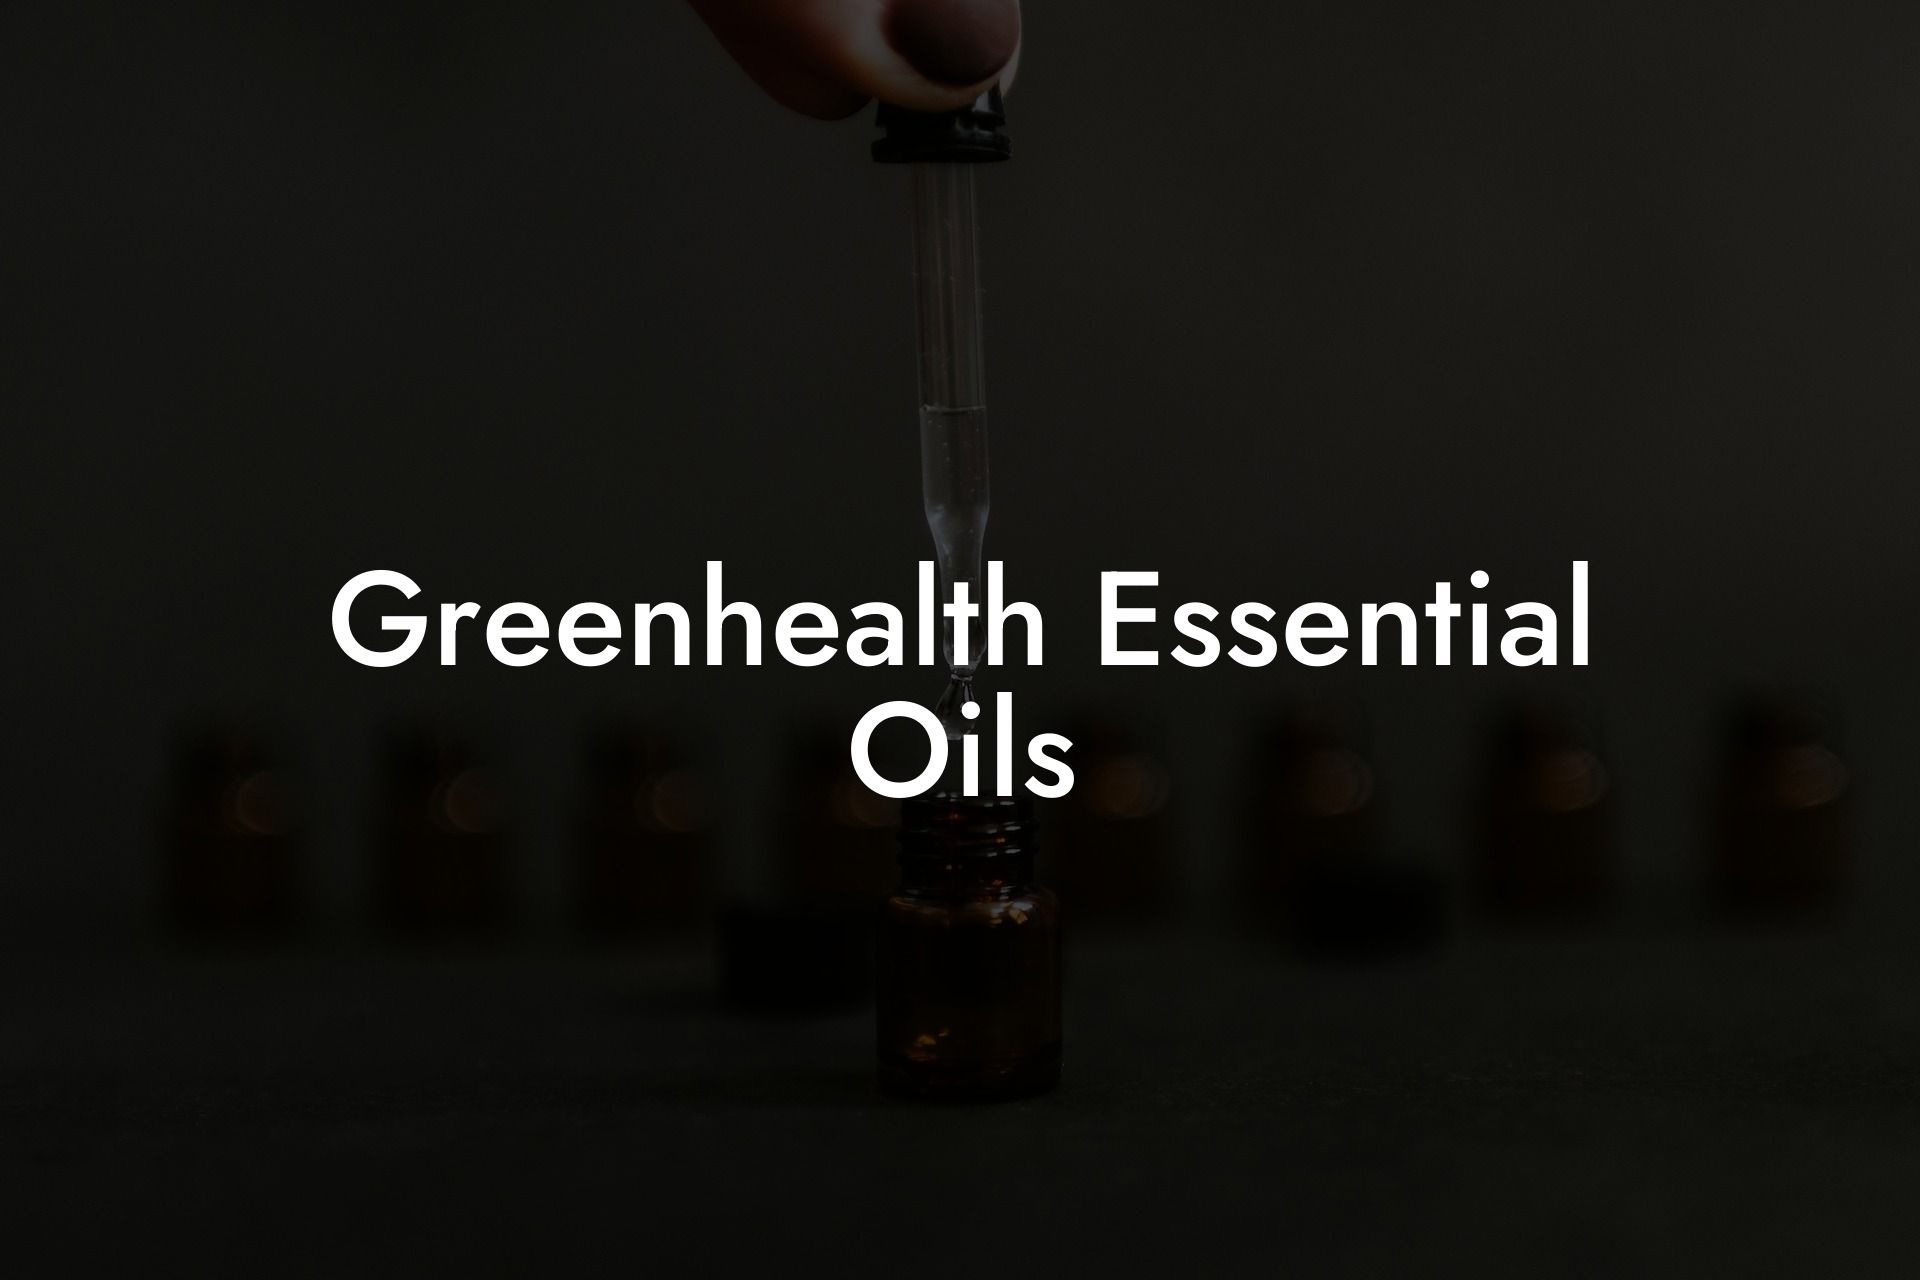 Greenhealth Essential Oils